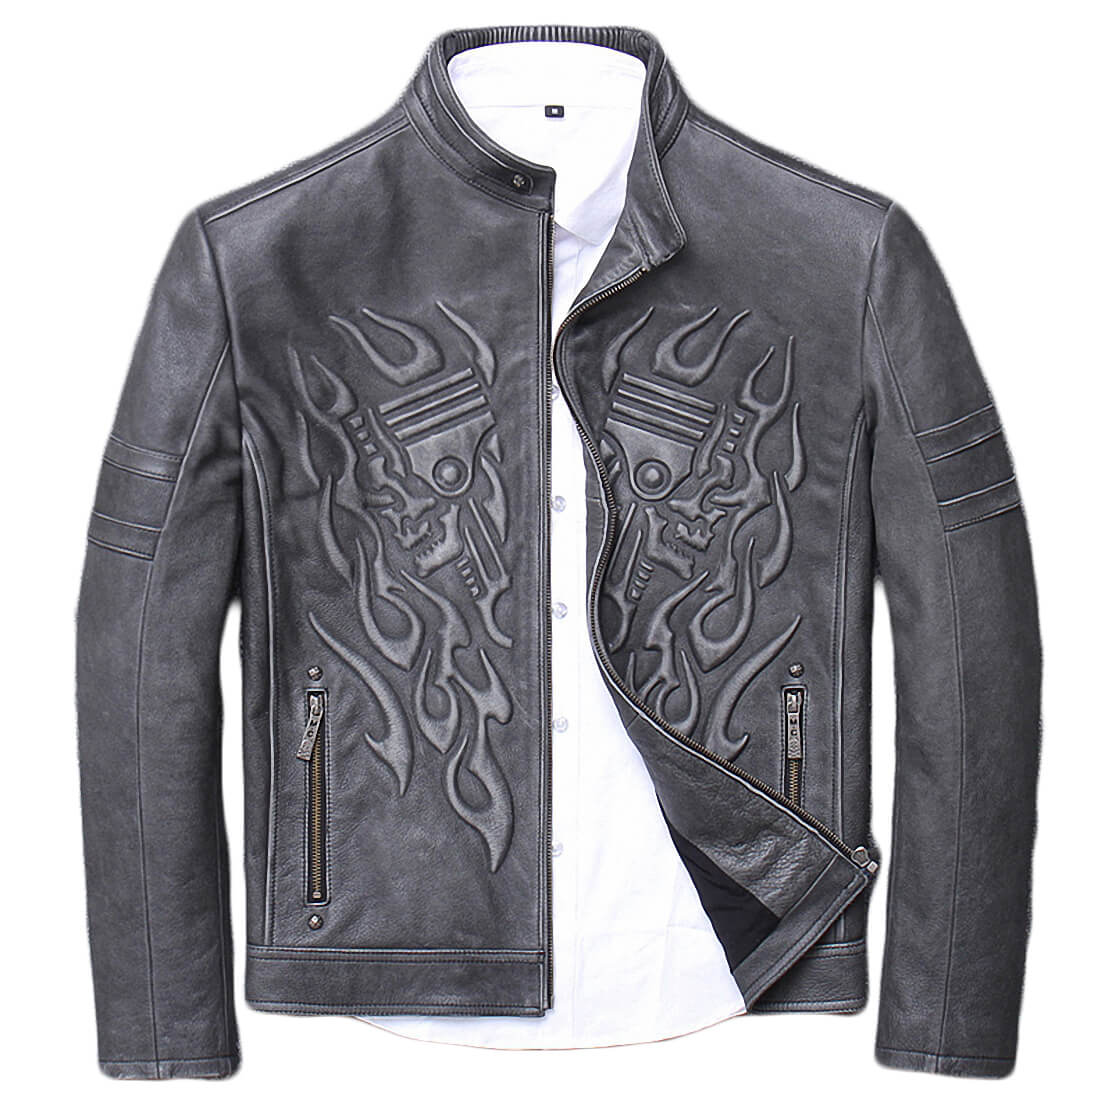 Urban Baron Biker Jacket / Genuine Leather Jacket Mens / Rave Outfits - HARD'N'HEAVY